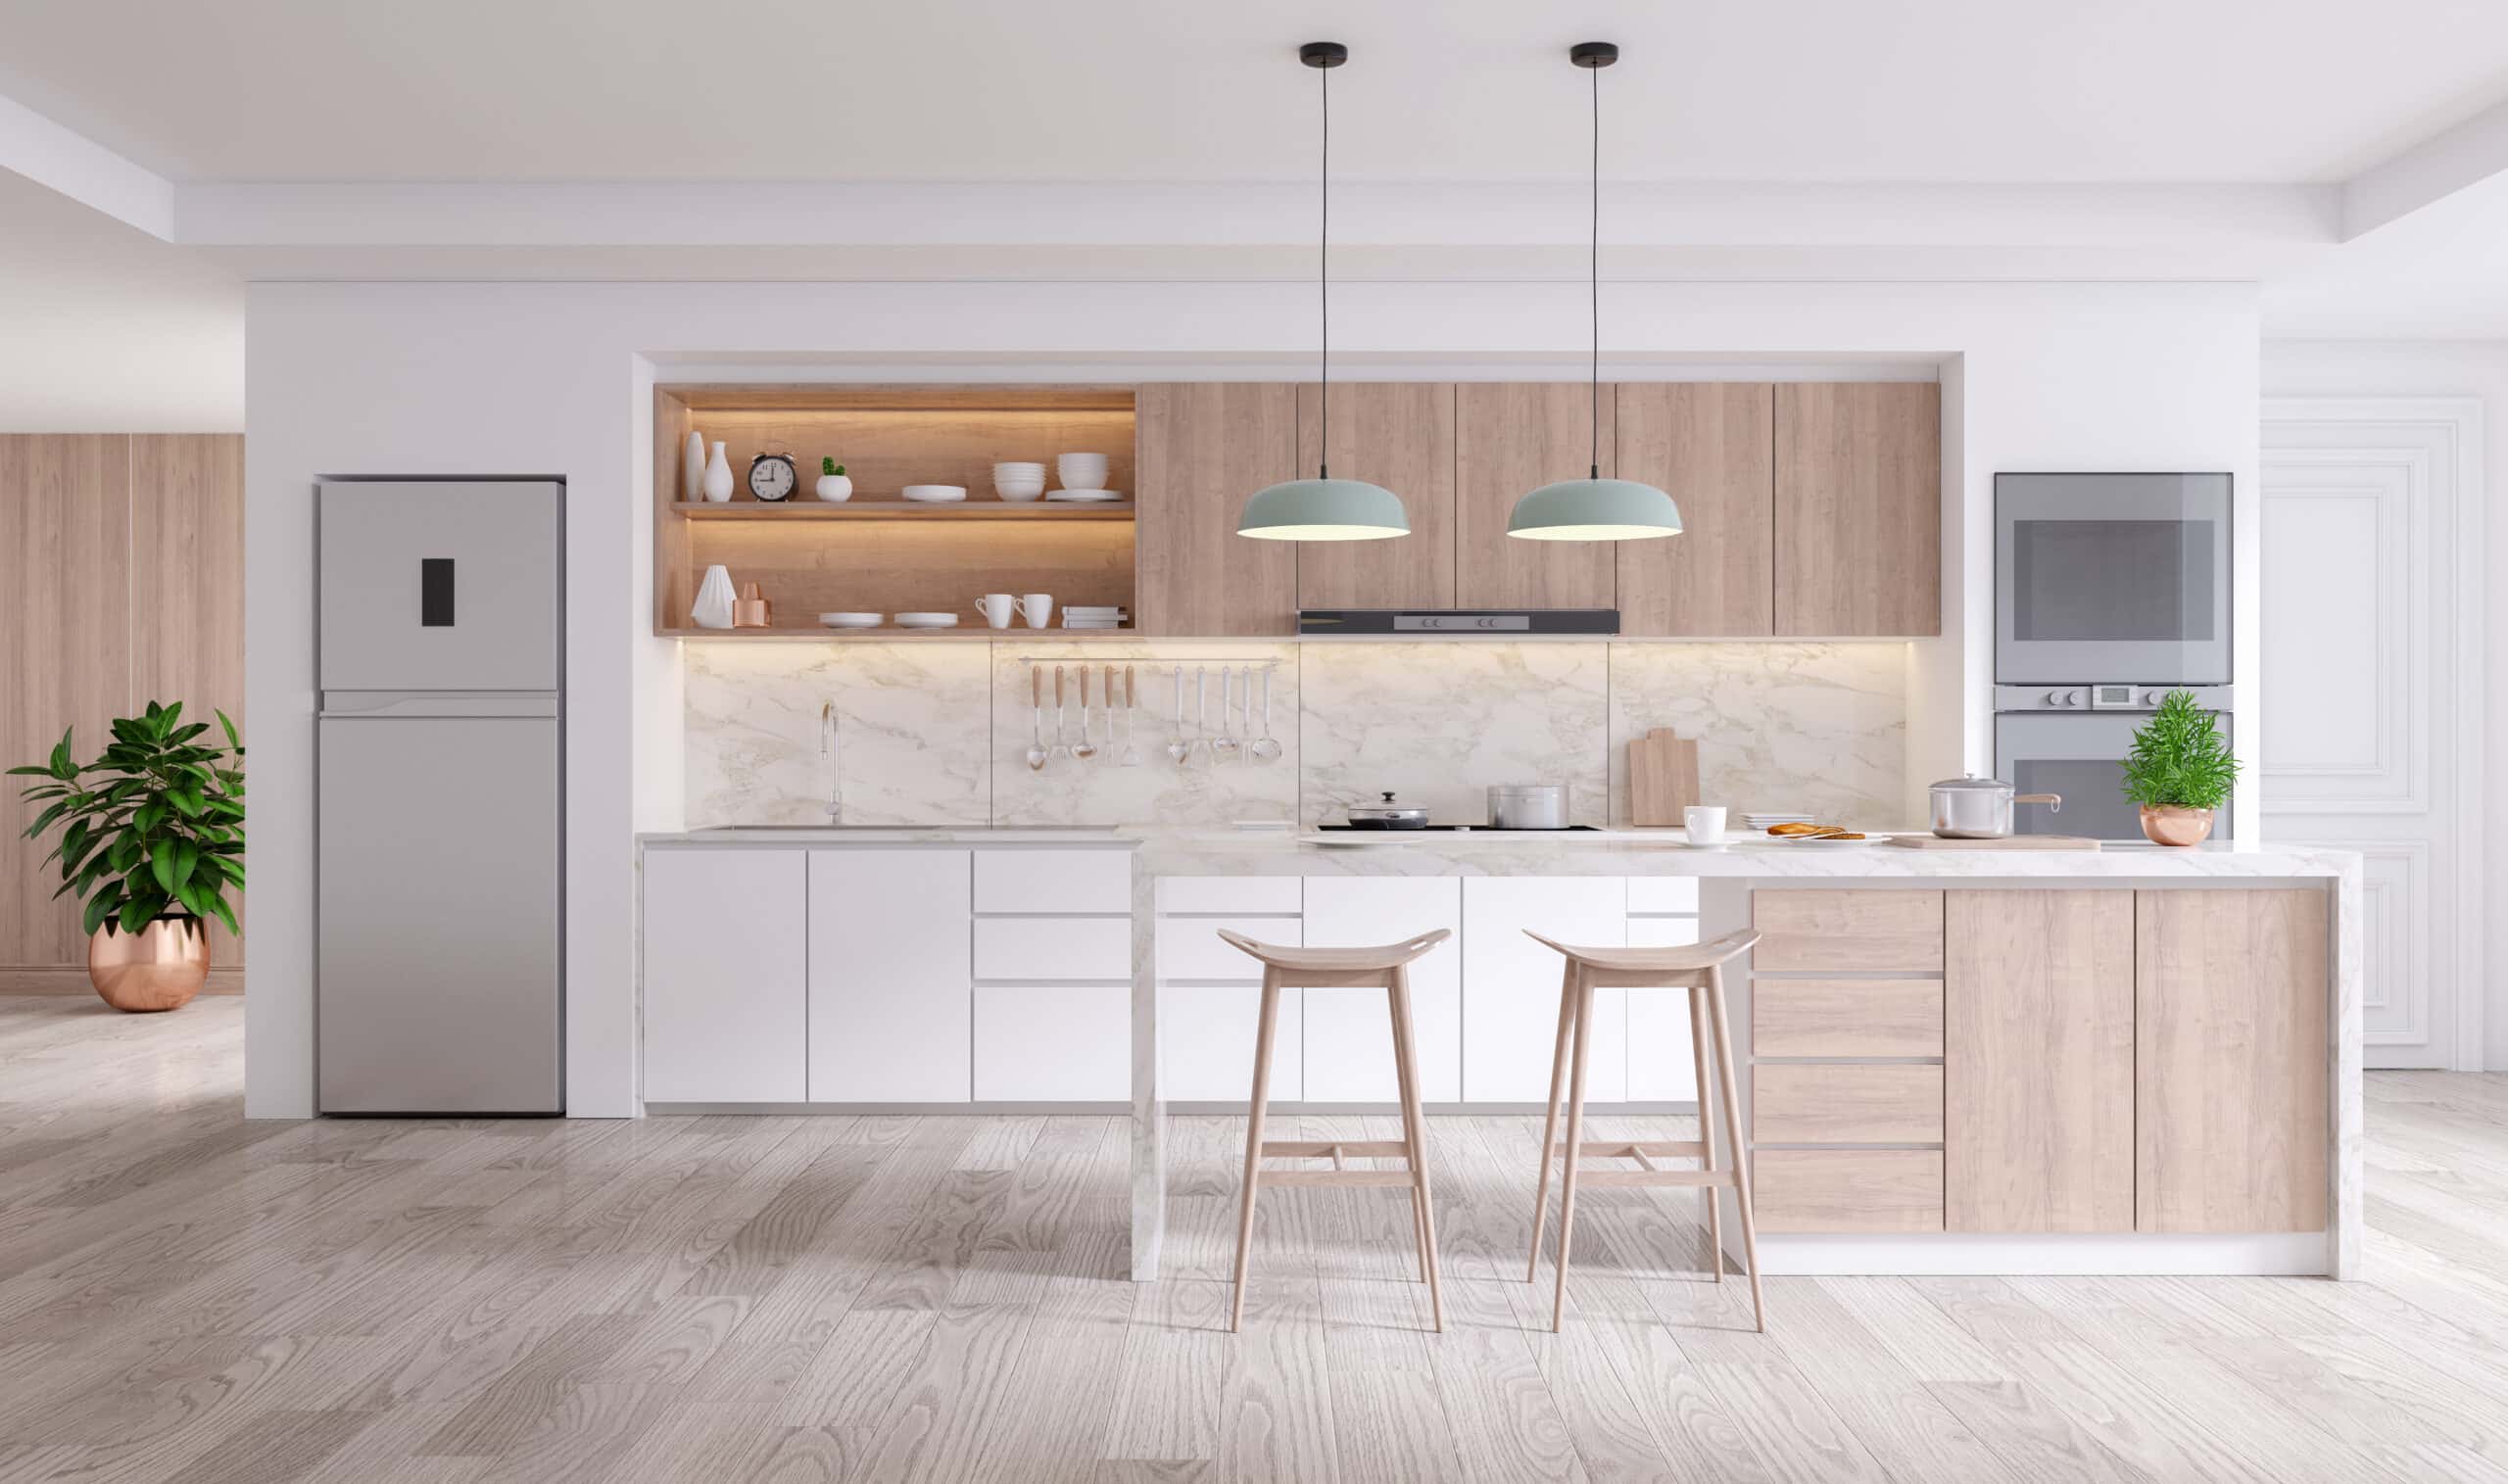 Elegant Contemporary Kitchen with wood flooring and luxurious backsplash